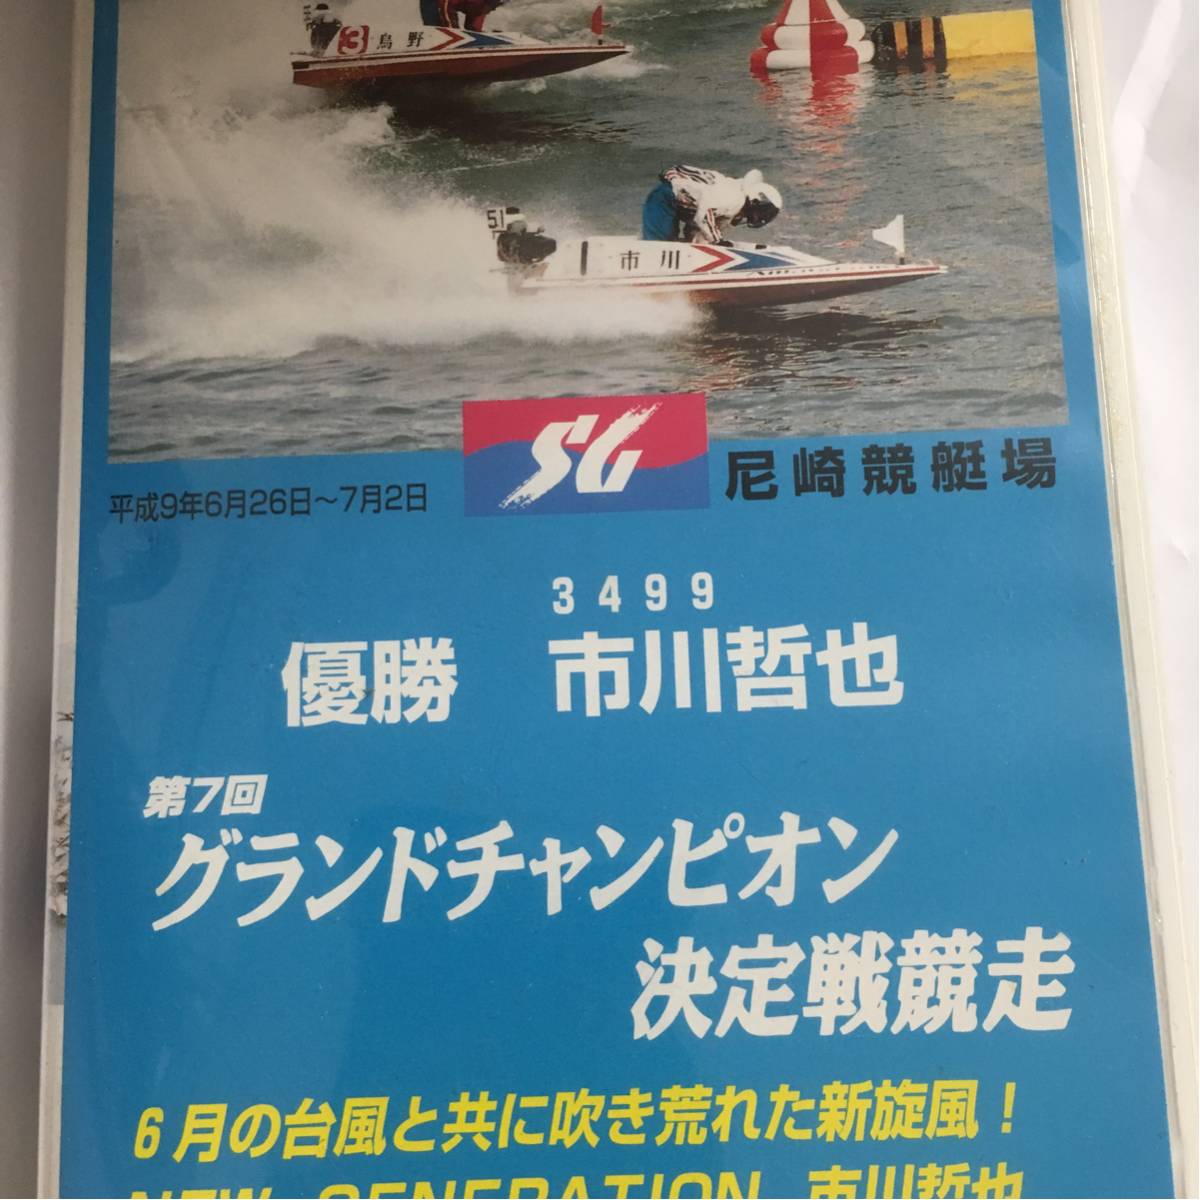  video boat race no. 7 times Grand Champion decision war . mileage Ichikawa ..